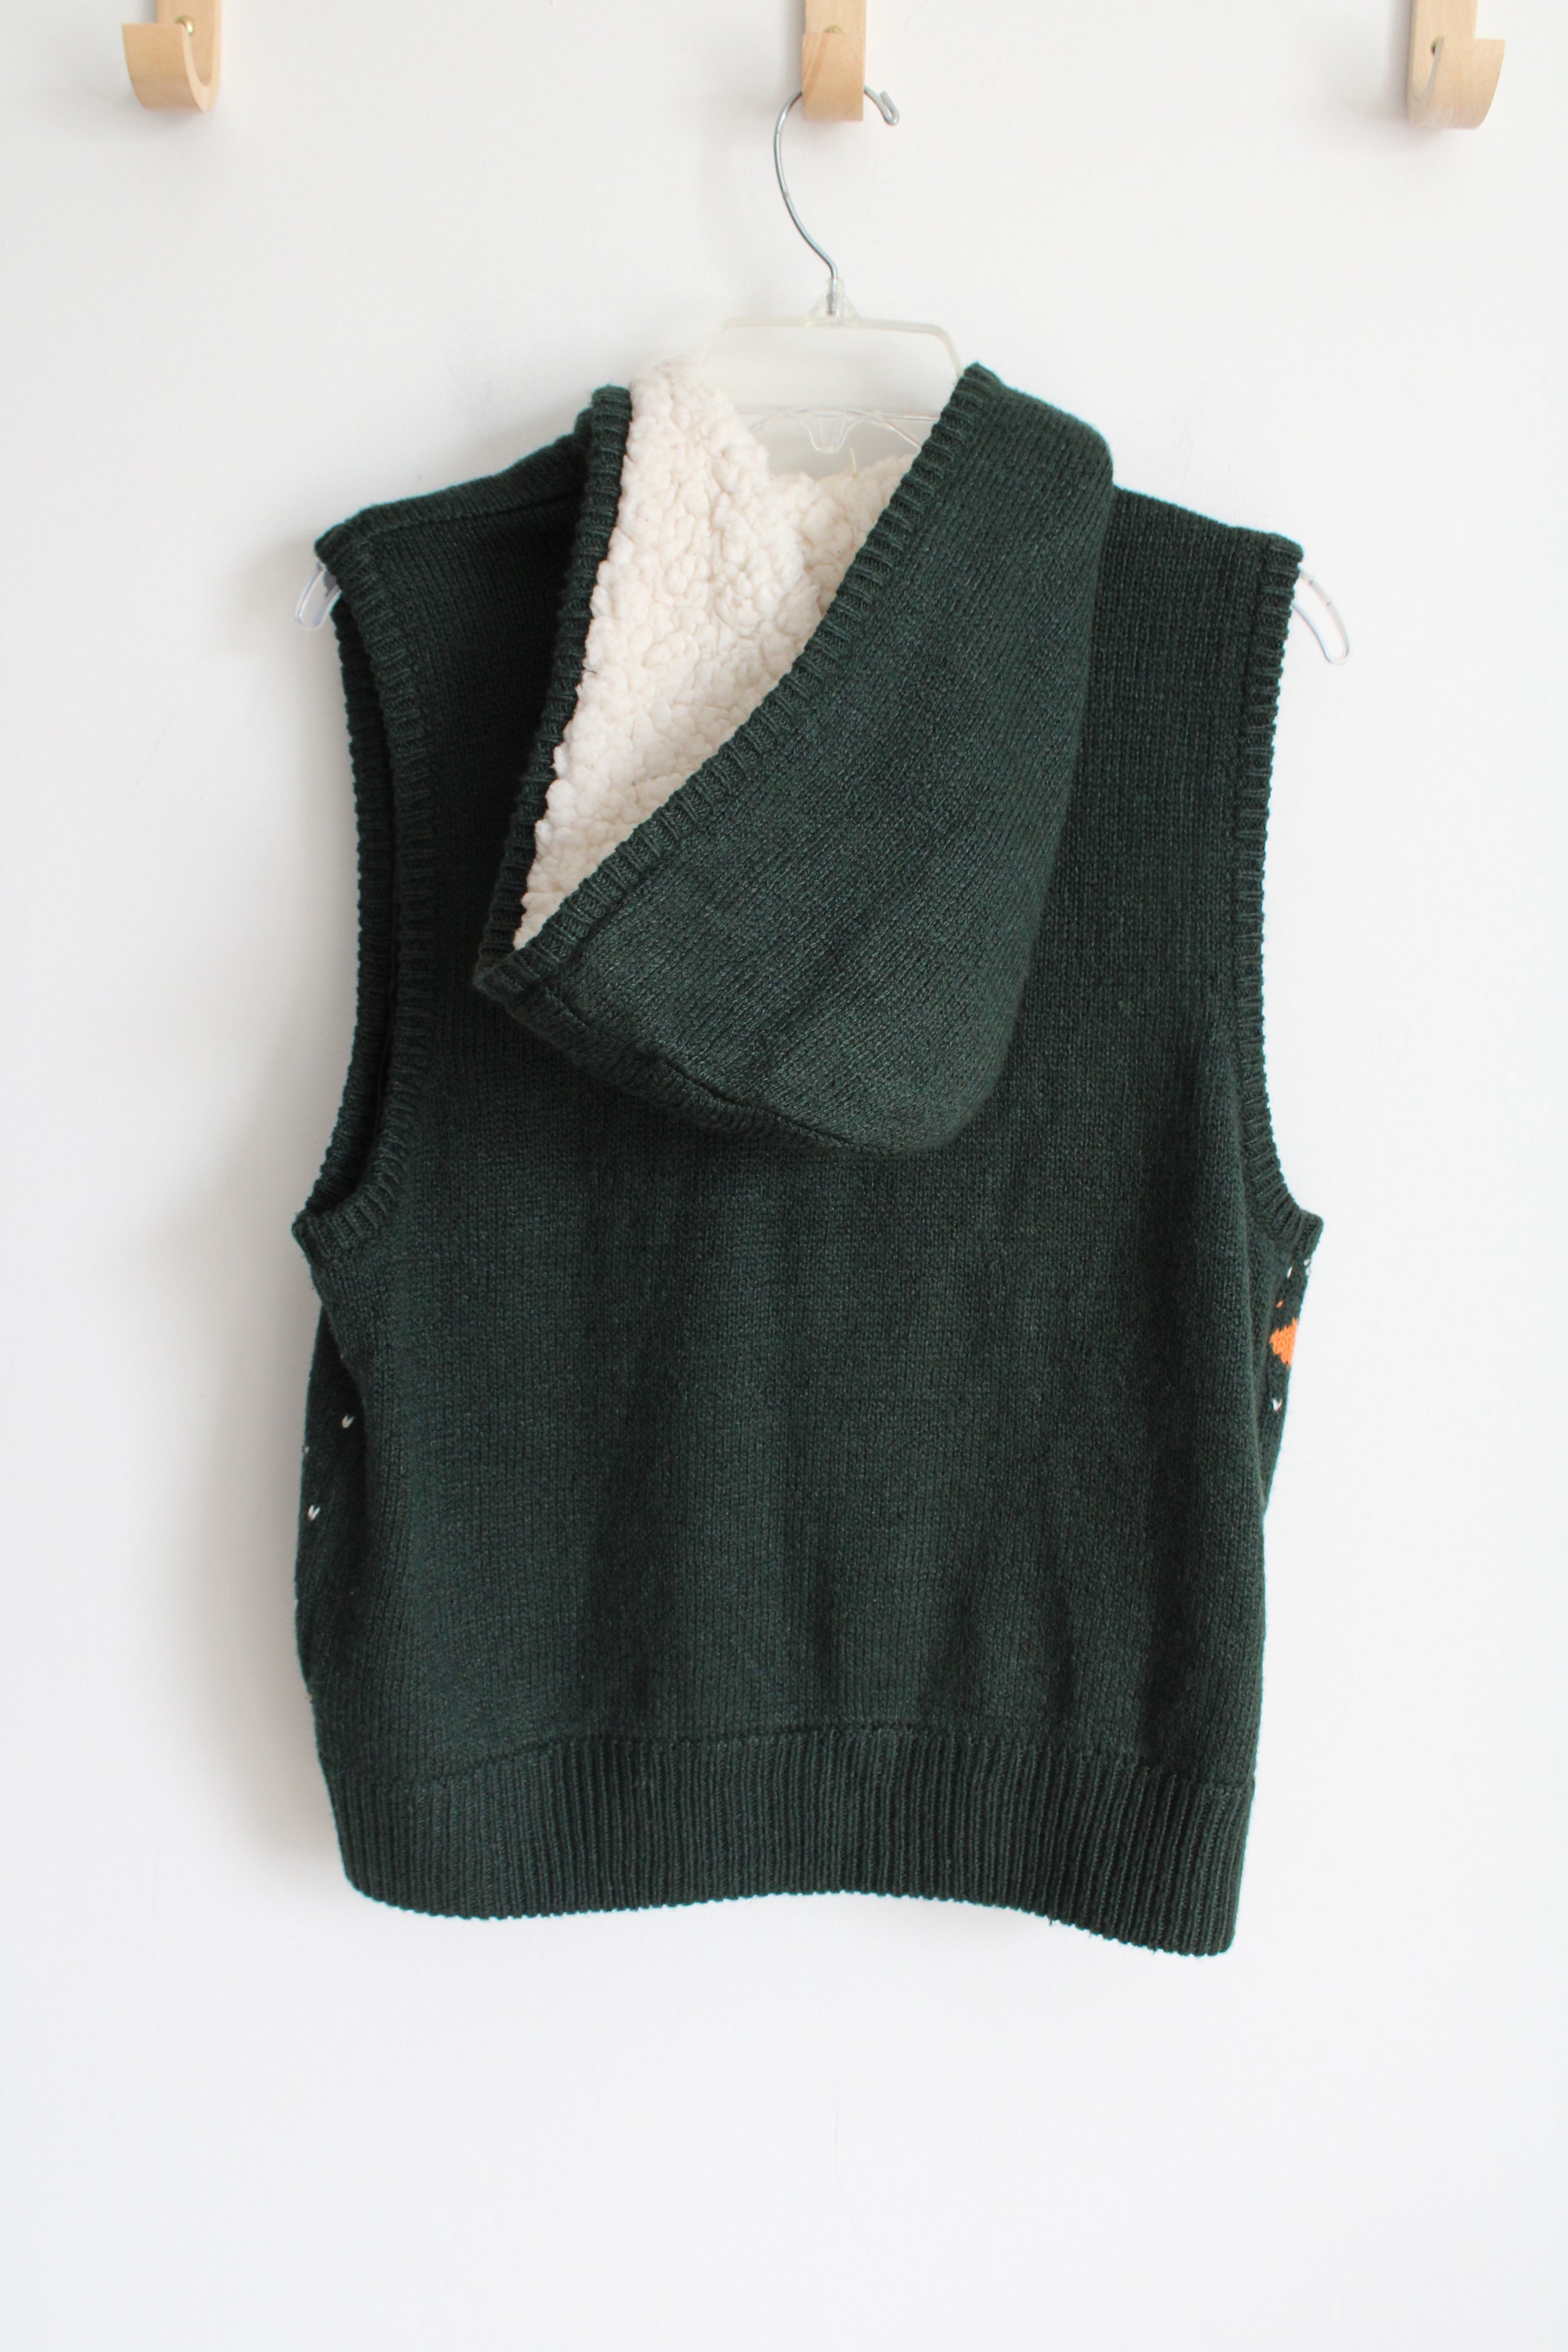 Tiara Green Orange Knit Sweater Vest | XL